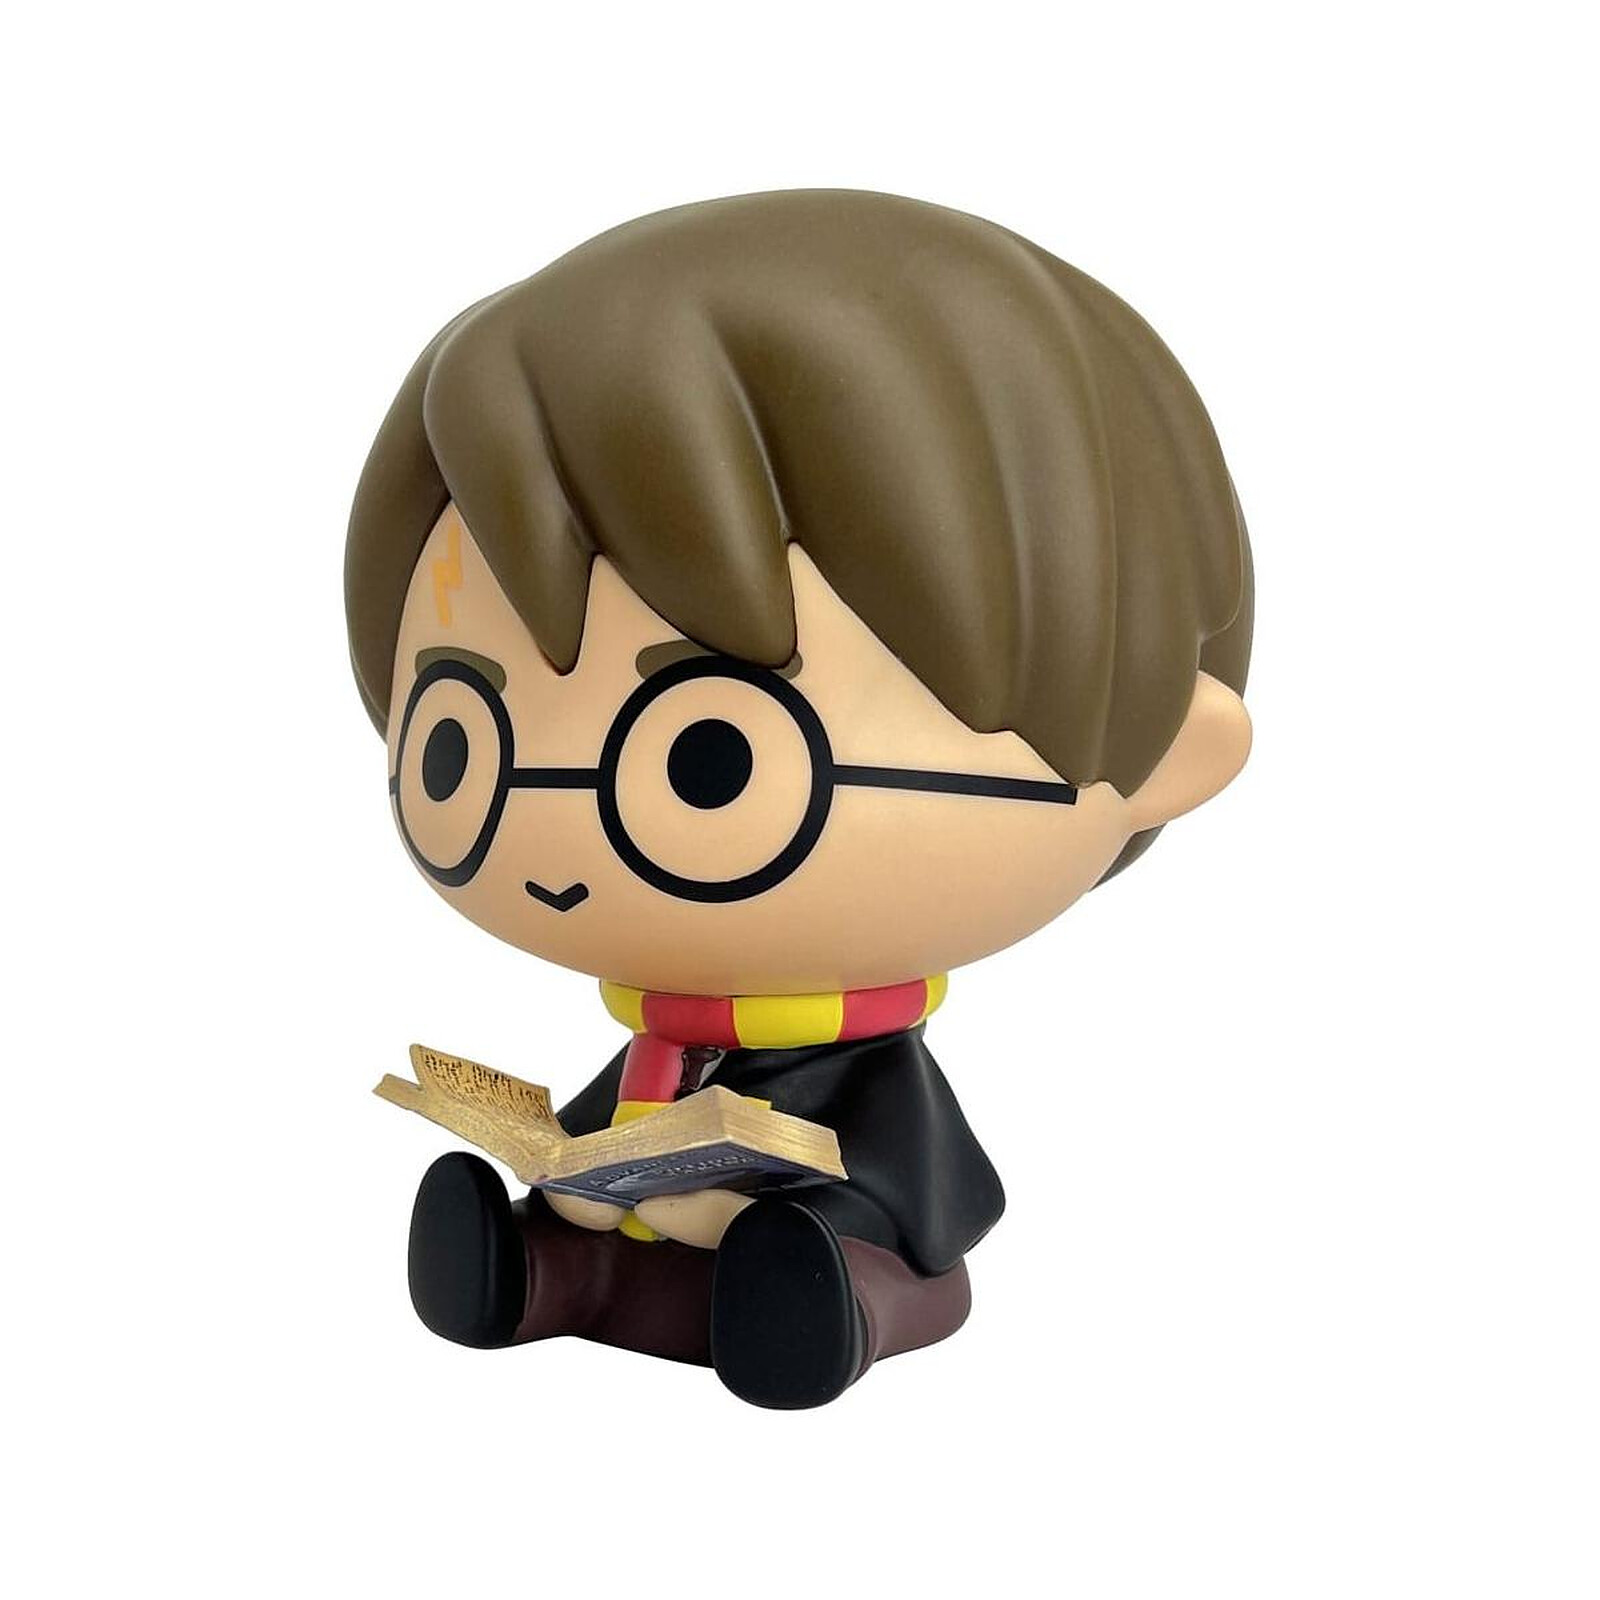 Harry Potter - Tirelire Harry Potter The Spell Book 18 cm - Figurines - LDLC